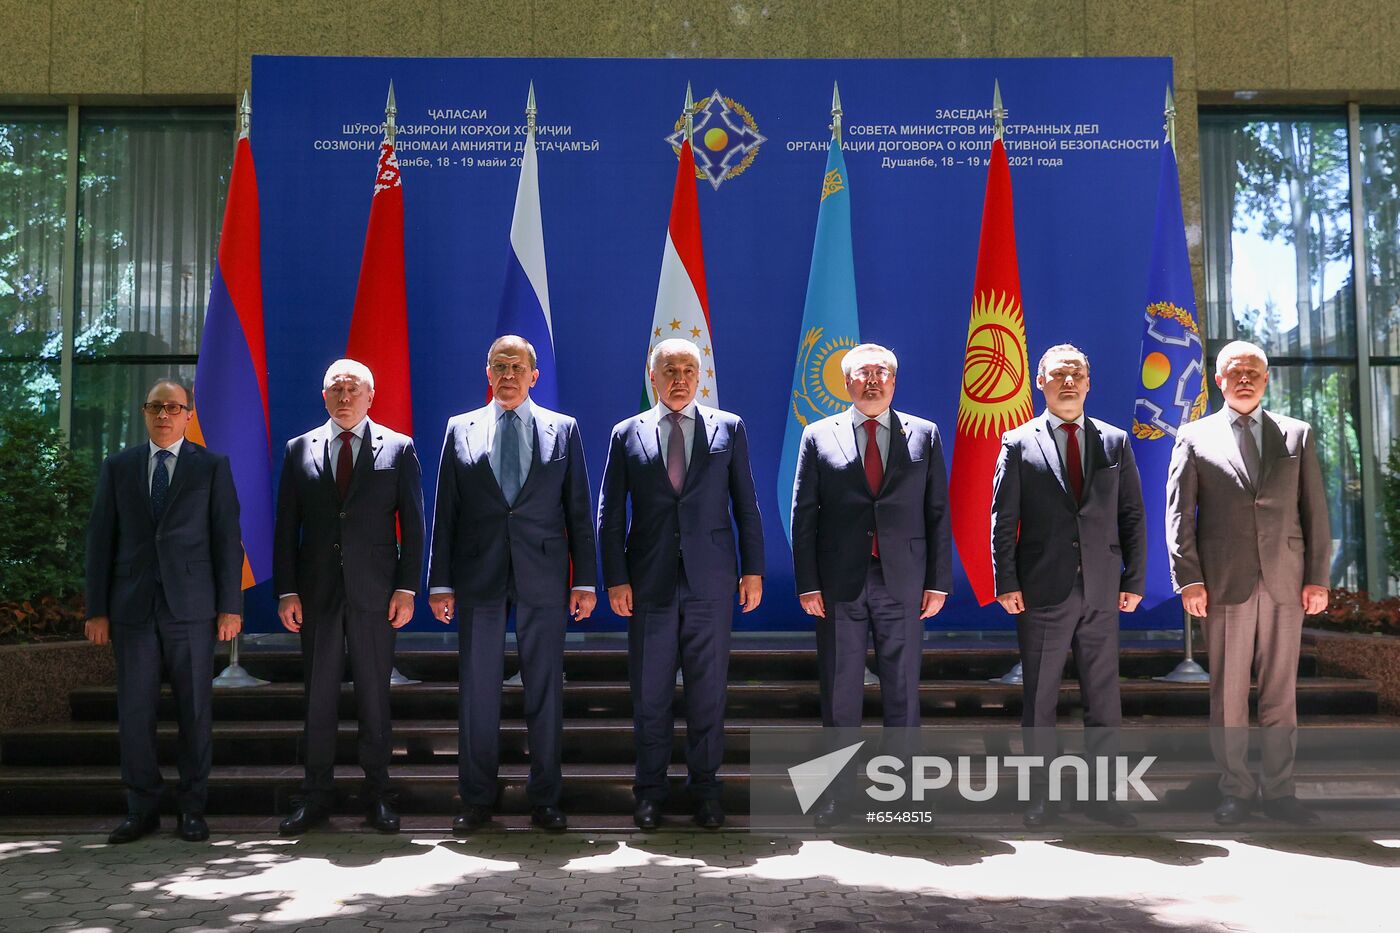 Tajikistan CSTO Foreign Ministers Council